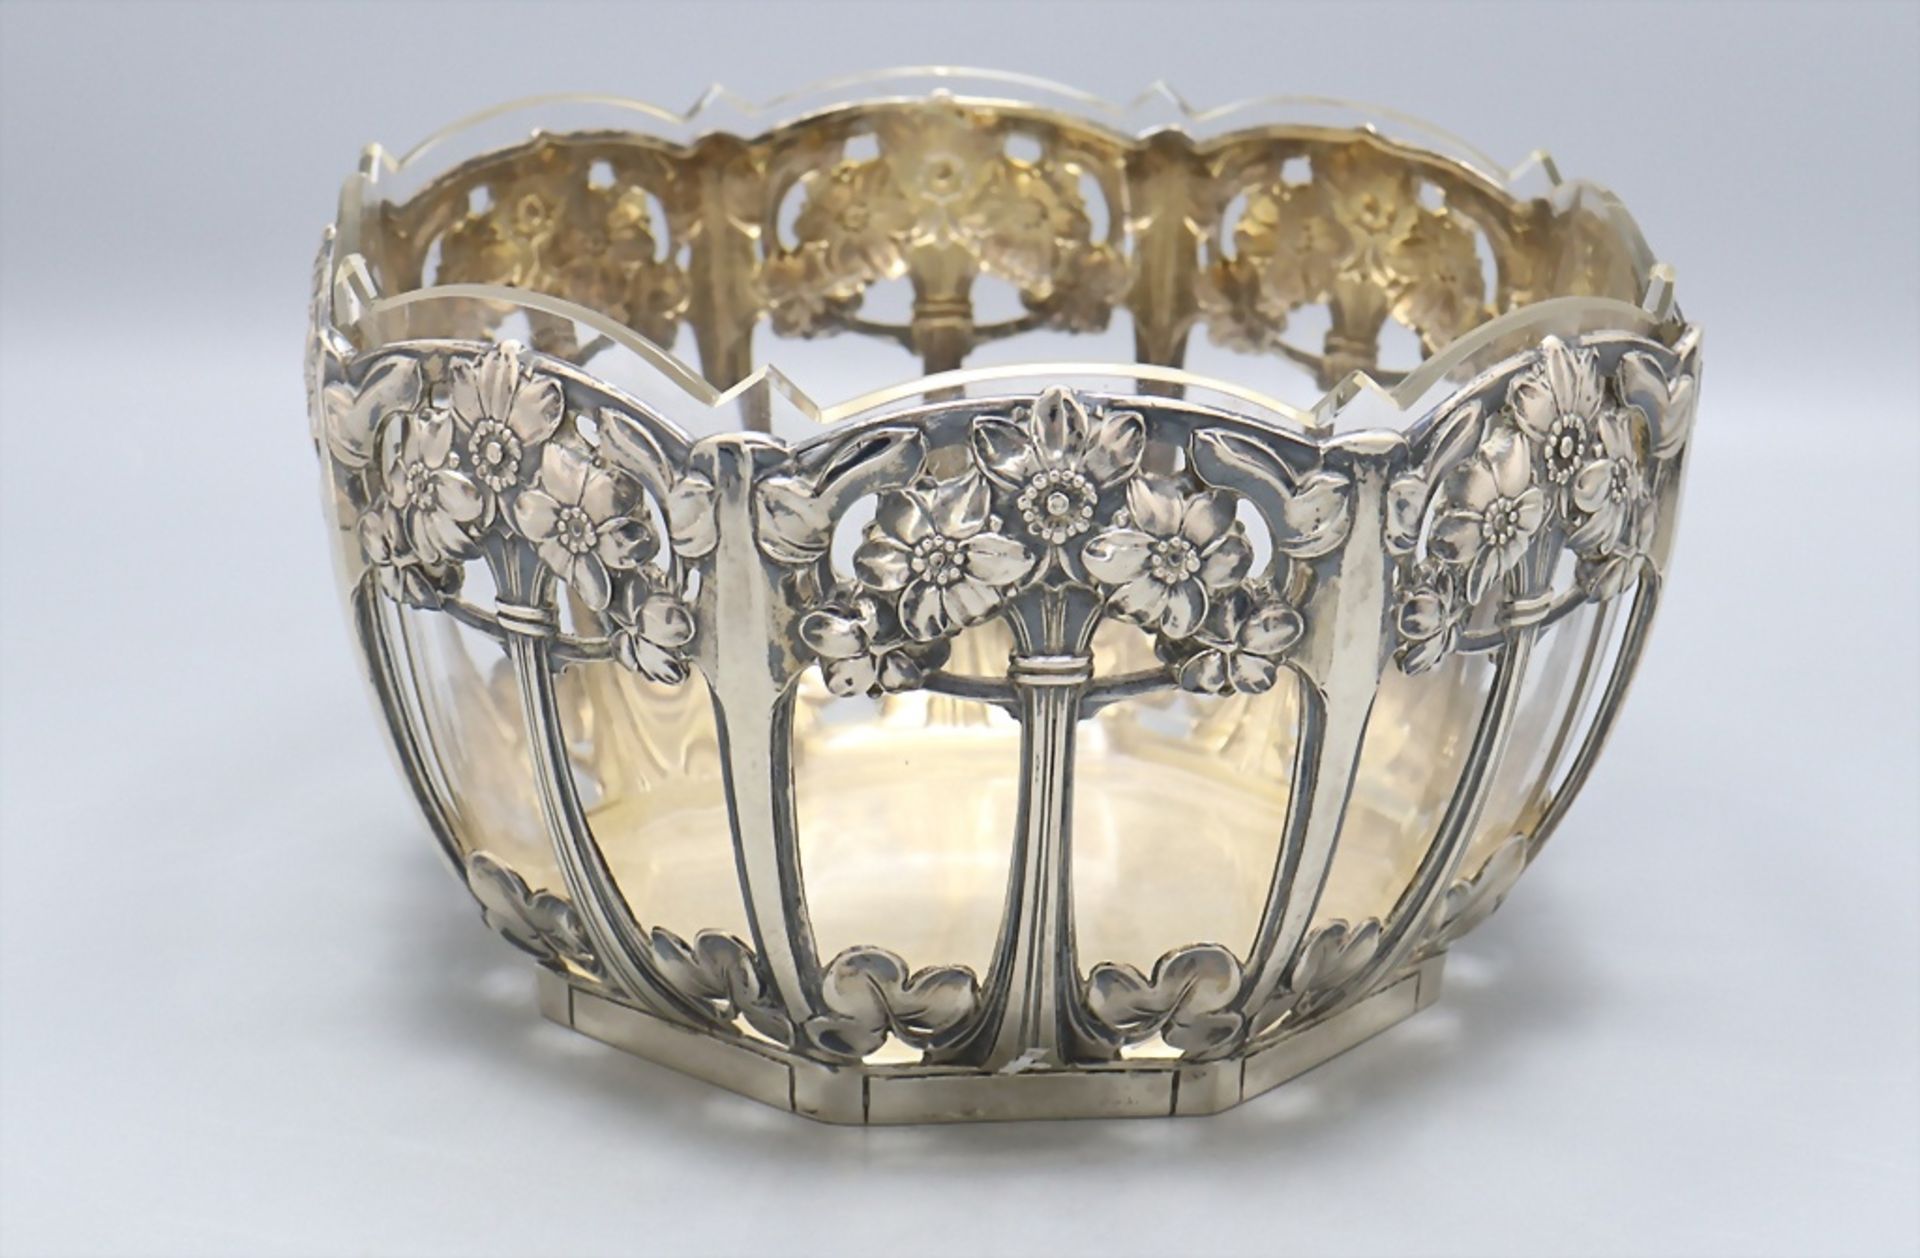 Jugendstil Obstschale mit Narzissen und Klee / An Art Nouveau silver fruit bowl with daffodils ...